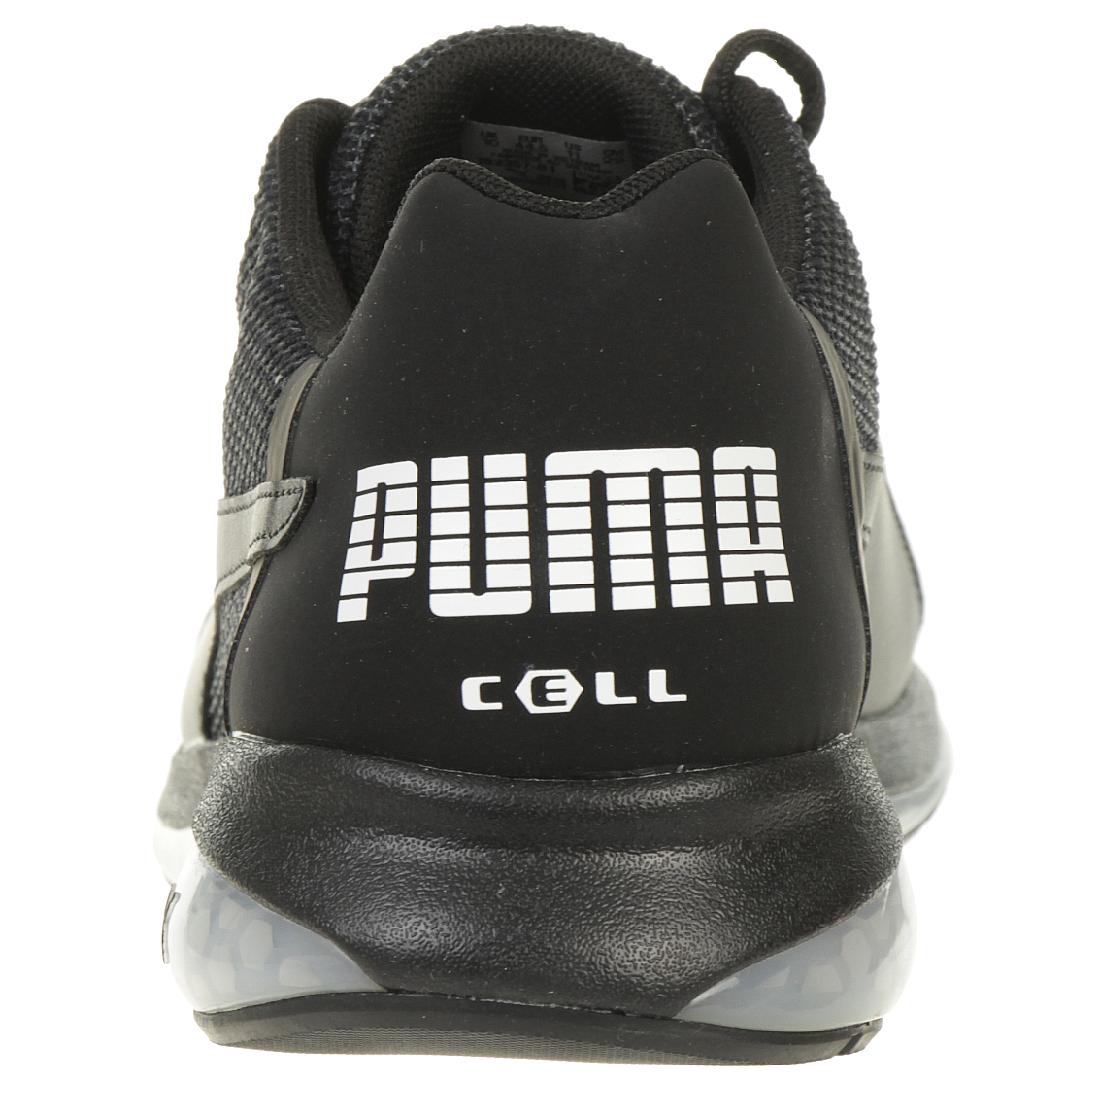 Puma Cell Ultimate Point Joggingschuhe Herren Fitnessschuhe 192357 01